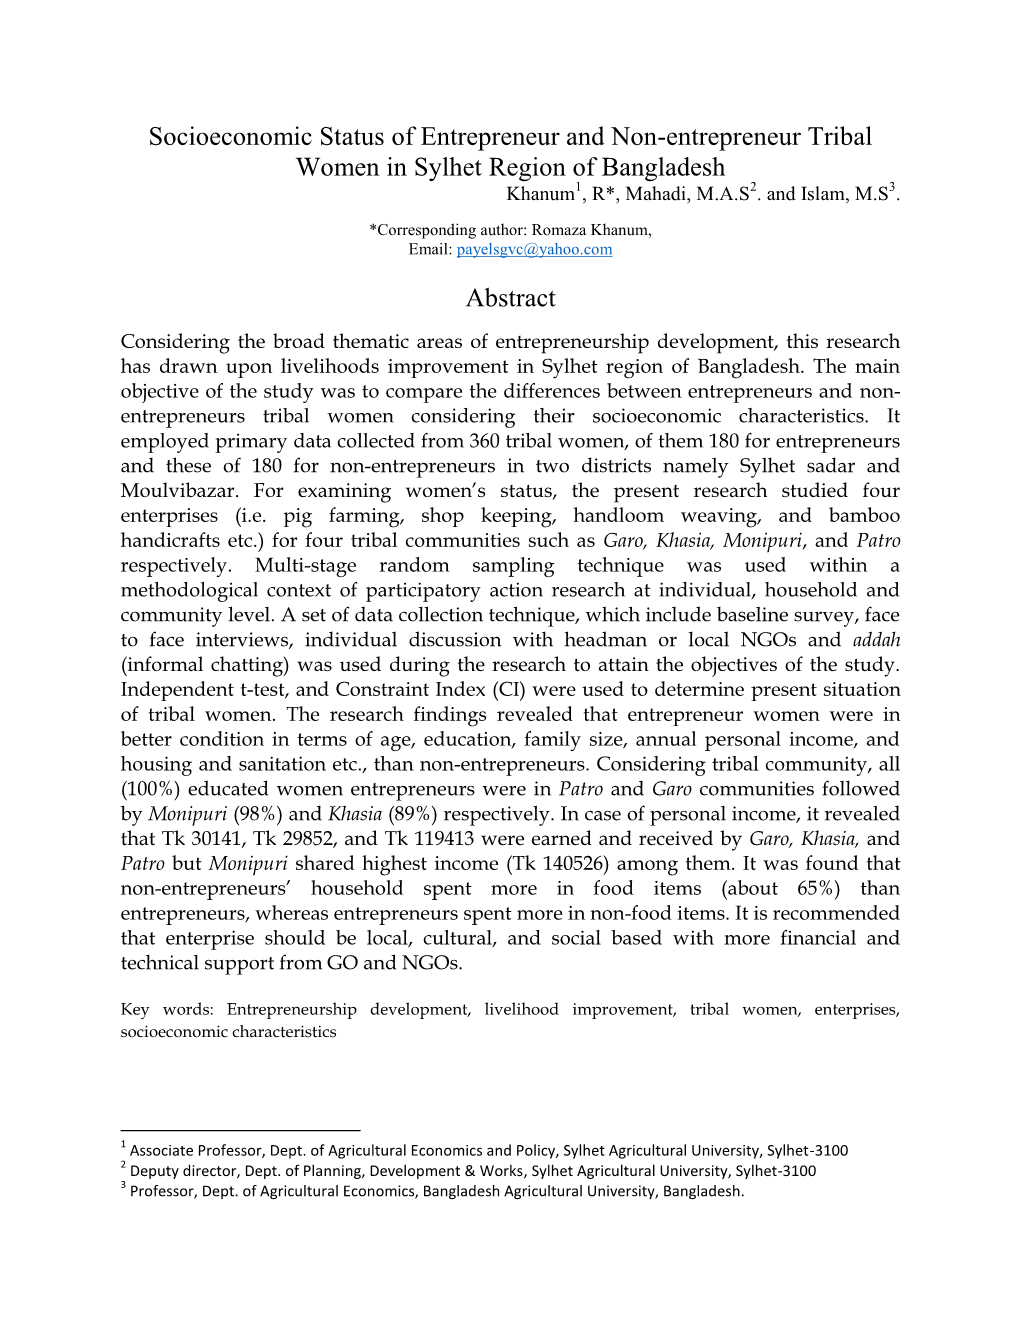 Socioeconomic Status of Entrepreneur and Non-Entrepreneur Tribal Women in Sylhet Region of Bangladesh Khanum1, R*, Mahadi, M.A.S2